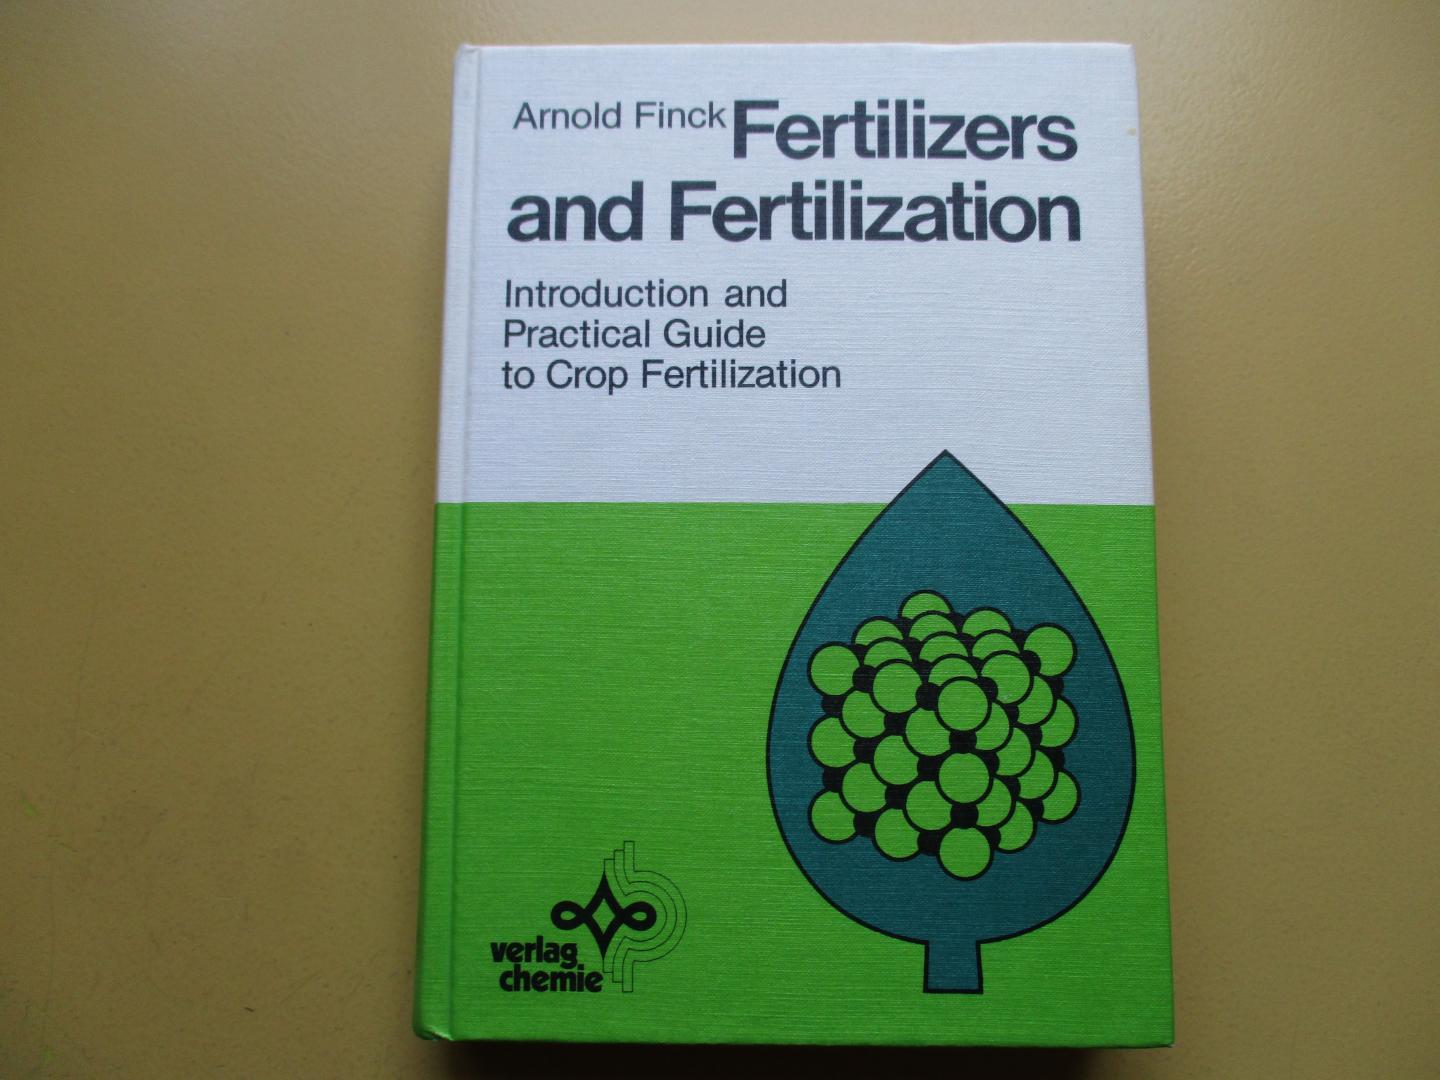 Finck, Arnold - Fertilizers and Fertilization - Introduction and Practical Guide to Crop Fertilization